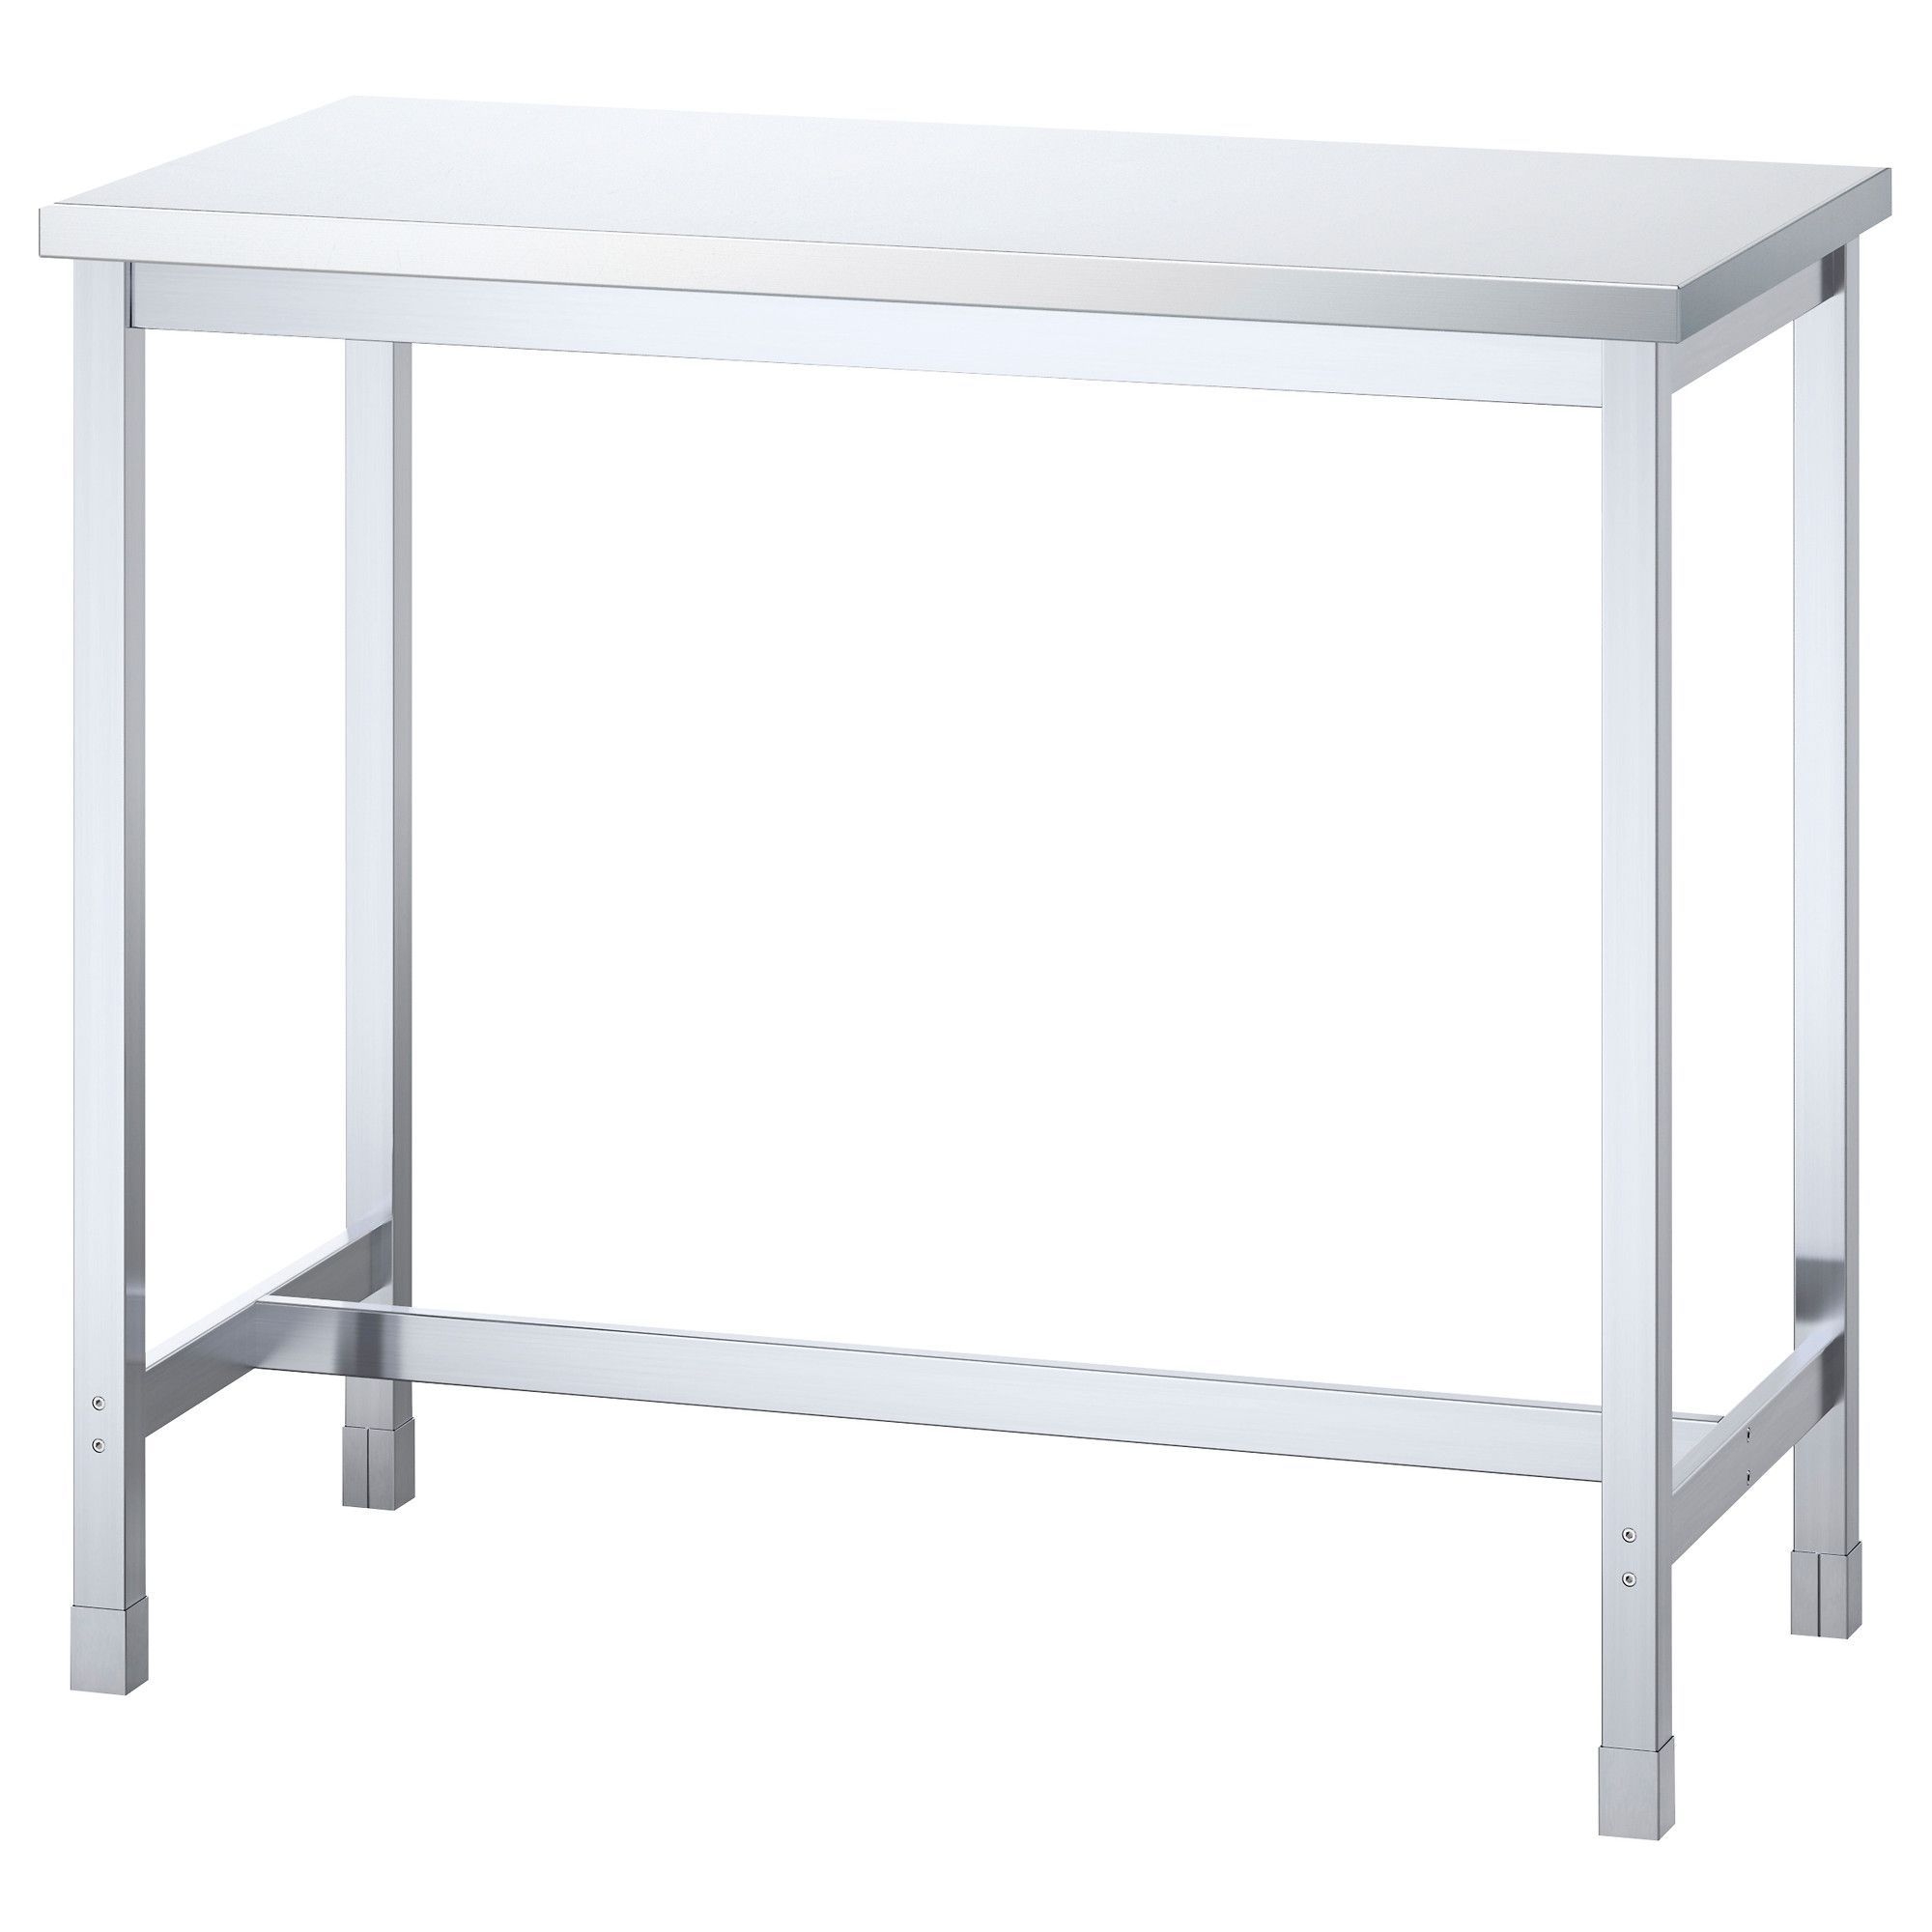 Rectangular bar height table